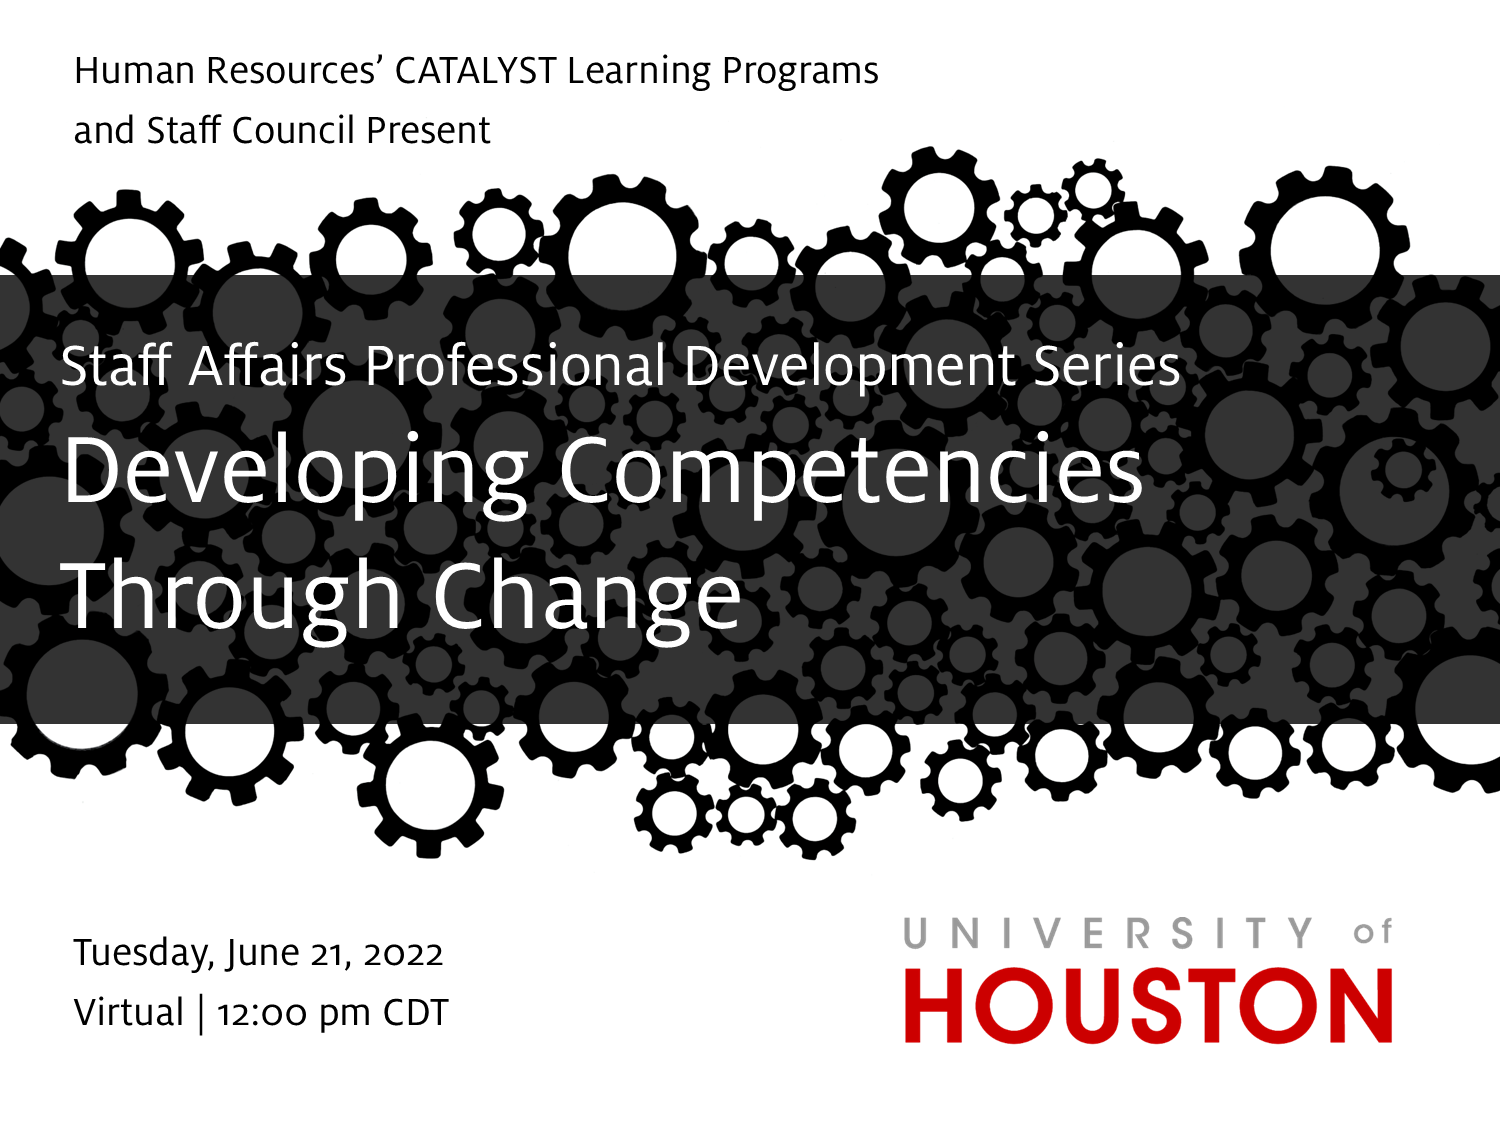 Staff Affairs Professional Development Series: Developing Competencies Through Change, Tuesday, June 21